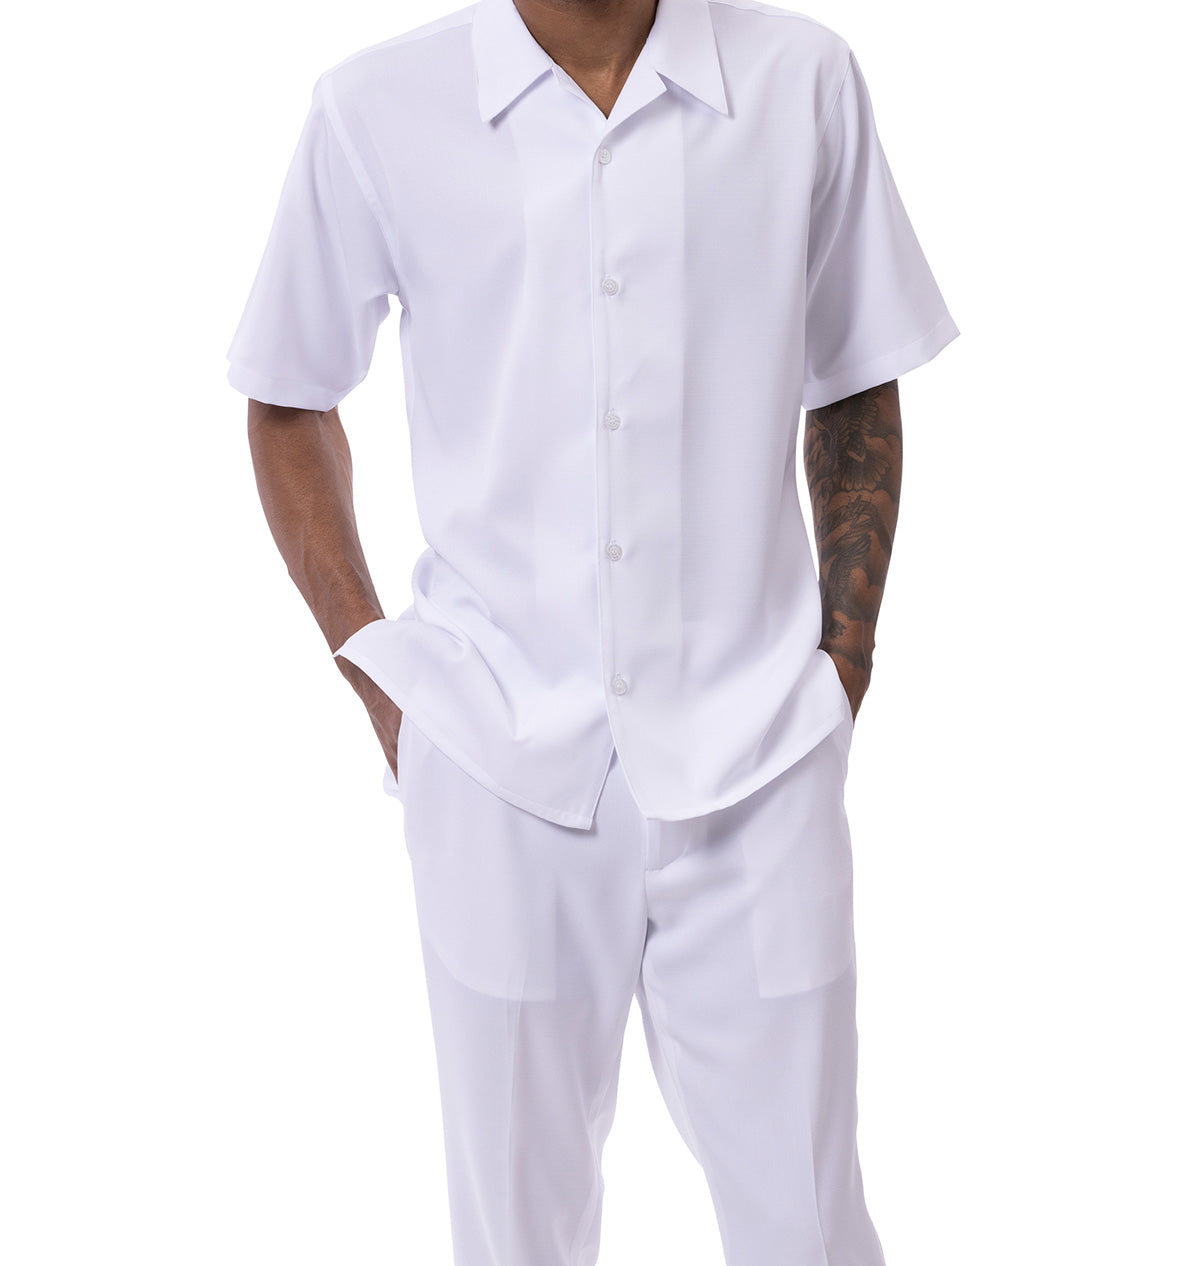 Solid White Walking Suit 2 Piece Short Sleeve Set